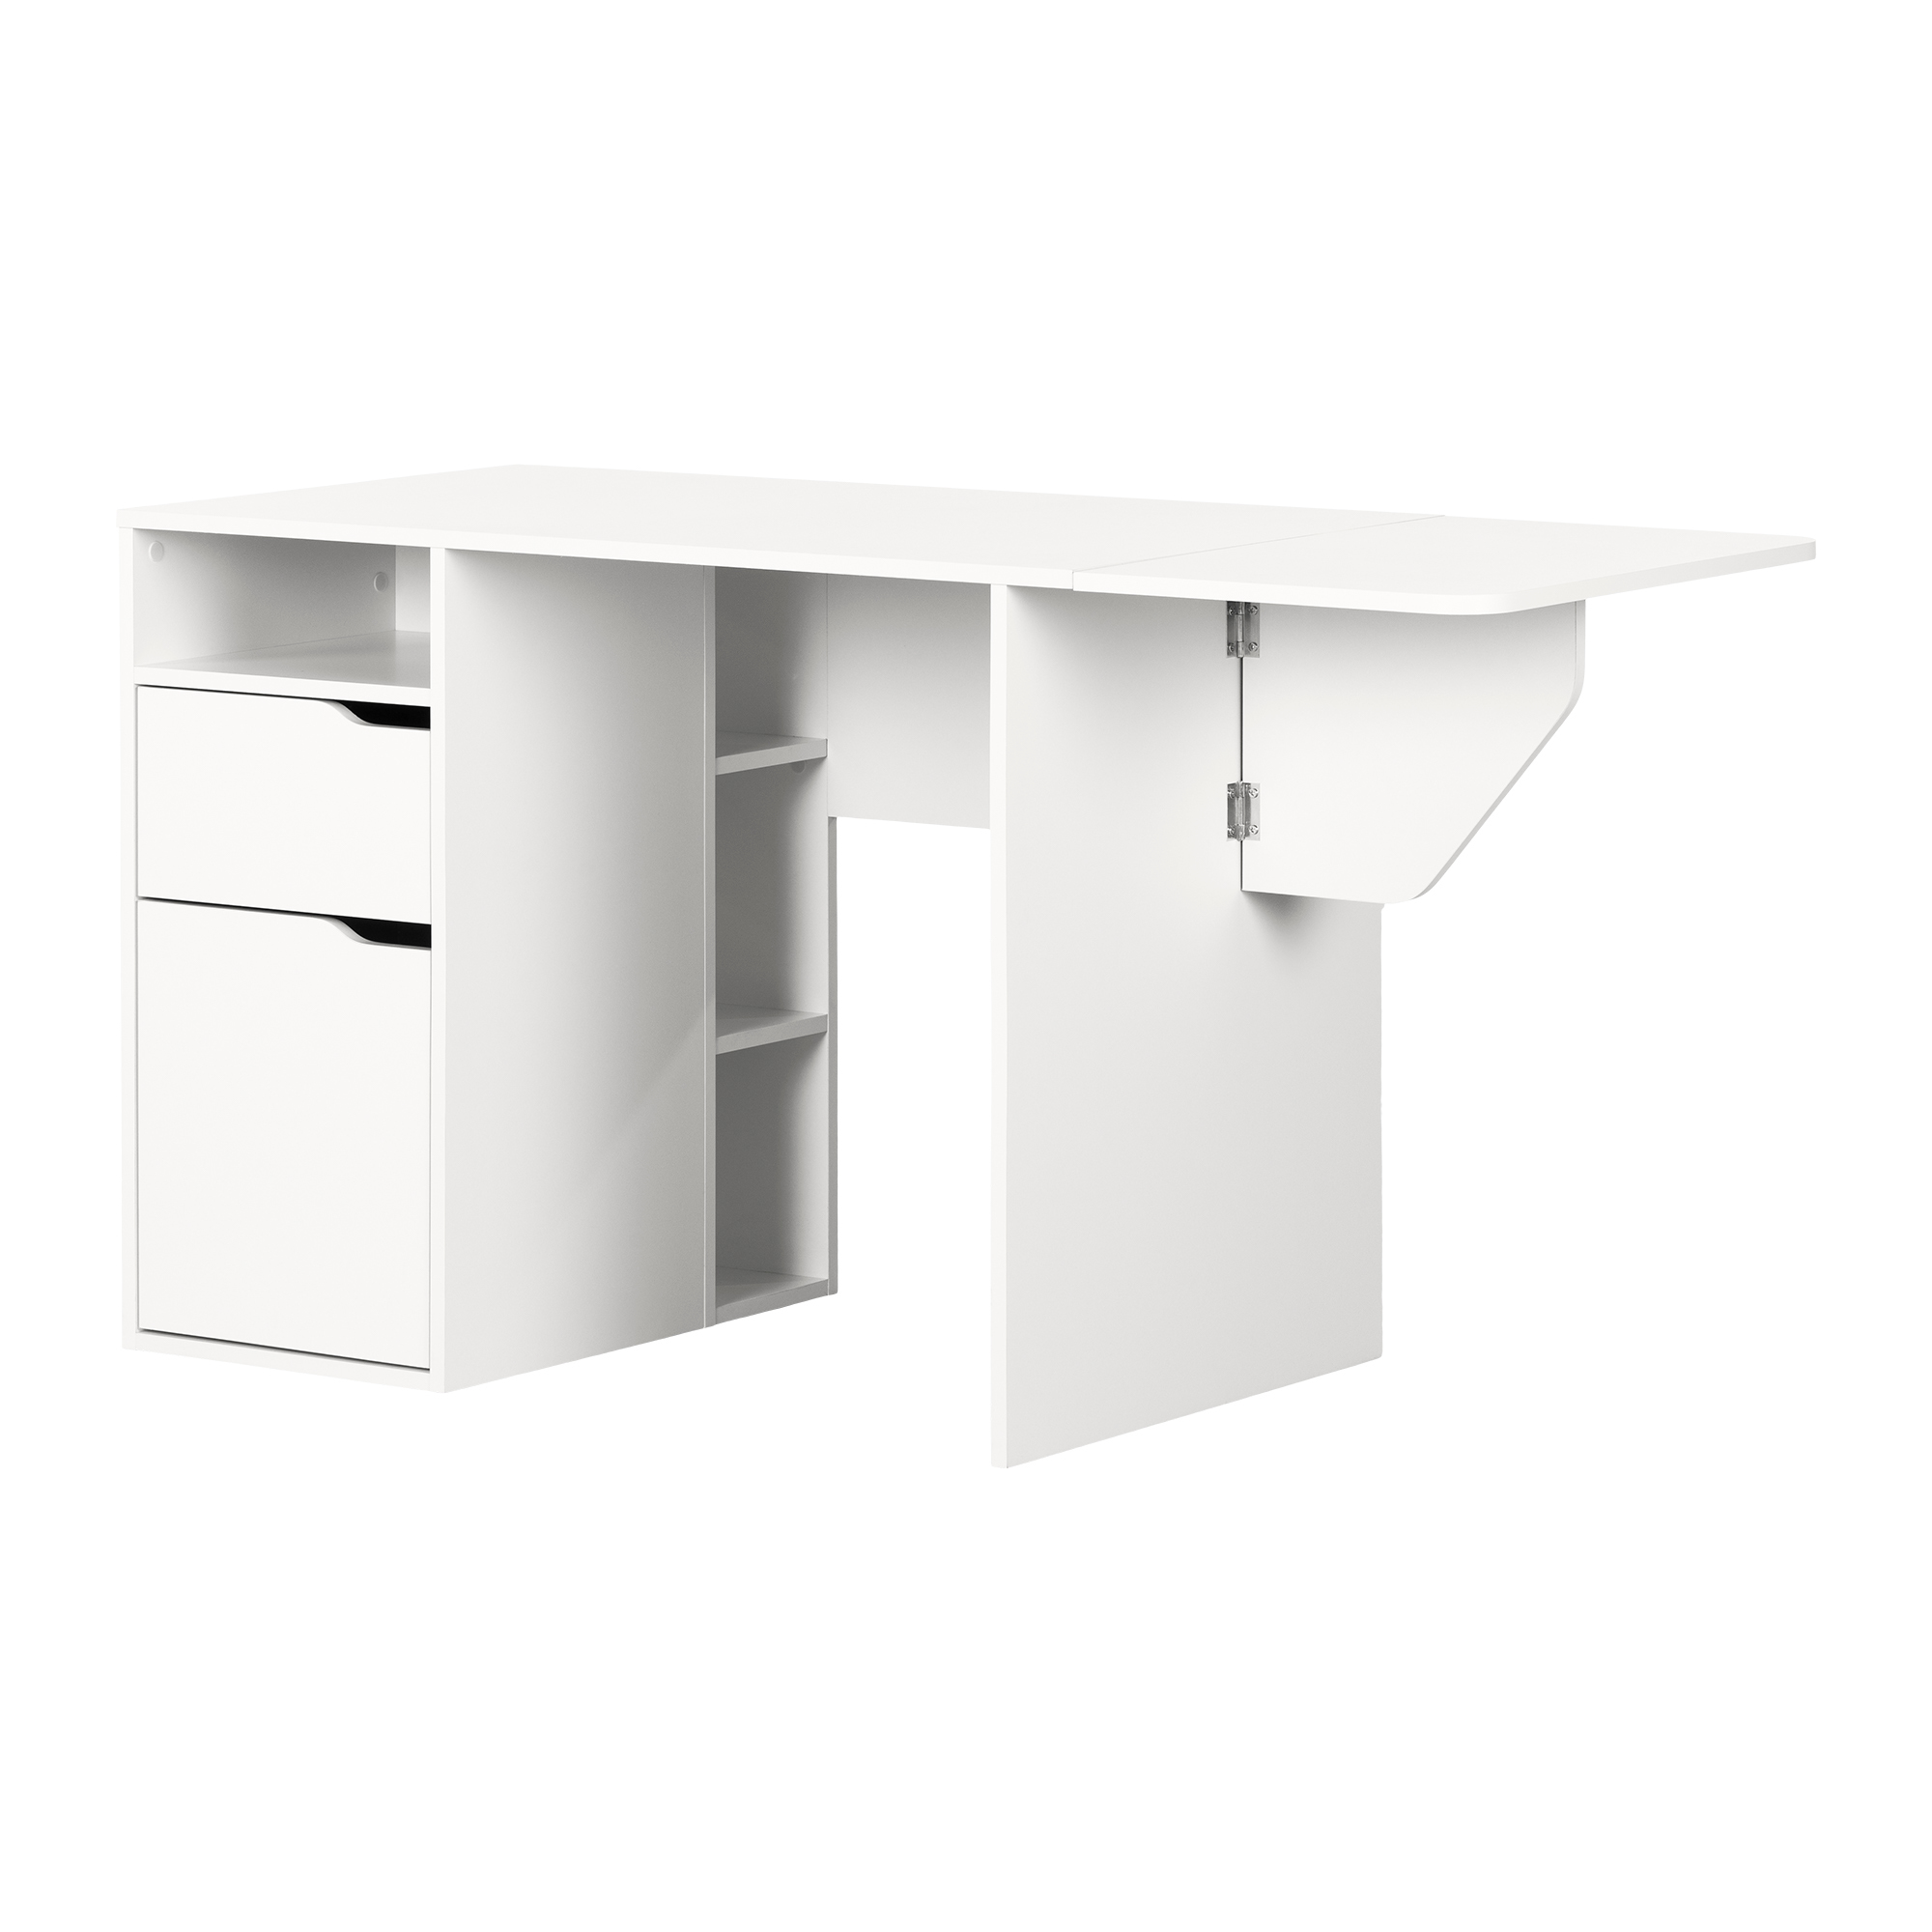 South Shore Crea Expandable Craft Table Desk, White - image 1 of 15